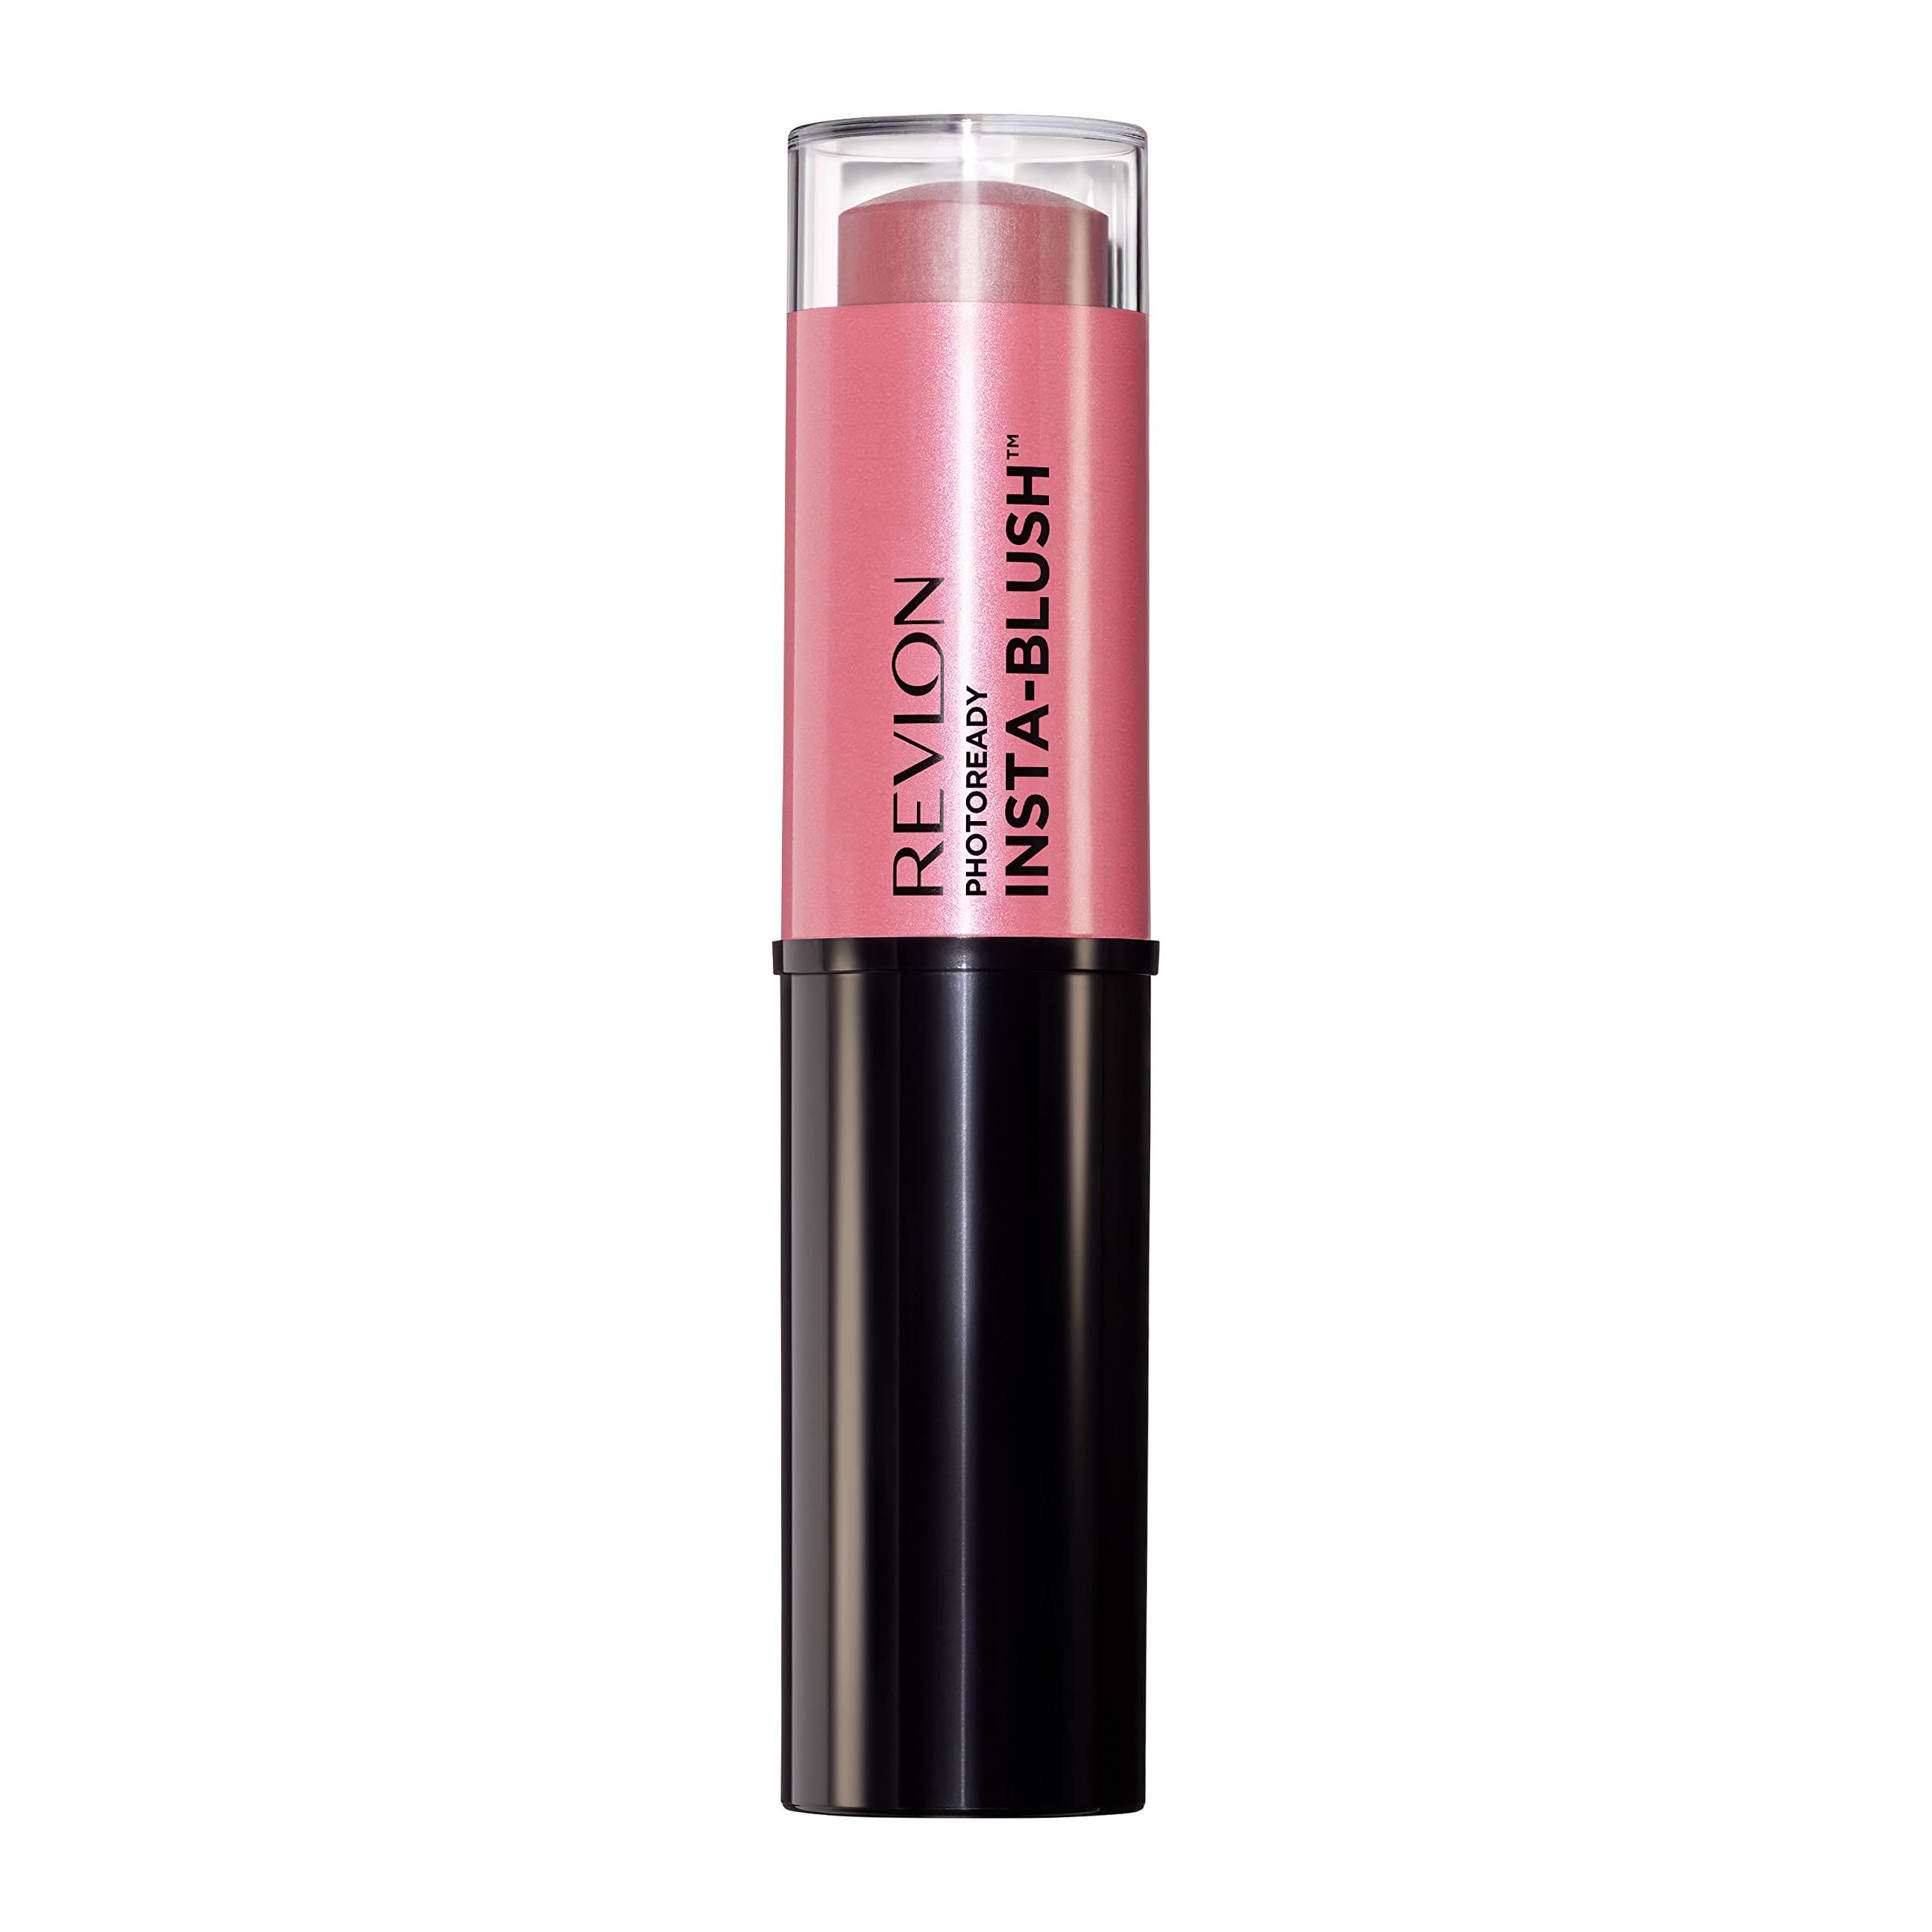 Revlon Blush Stick, PhotoReady Insta-Blush Face Makeup with Cream to Powder Formula, High Impact Color, Moisturizing Creamy Formula, 320 Berry Kiss, 1.15 Oz